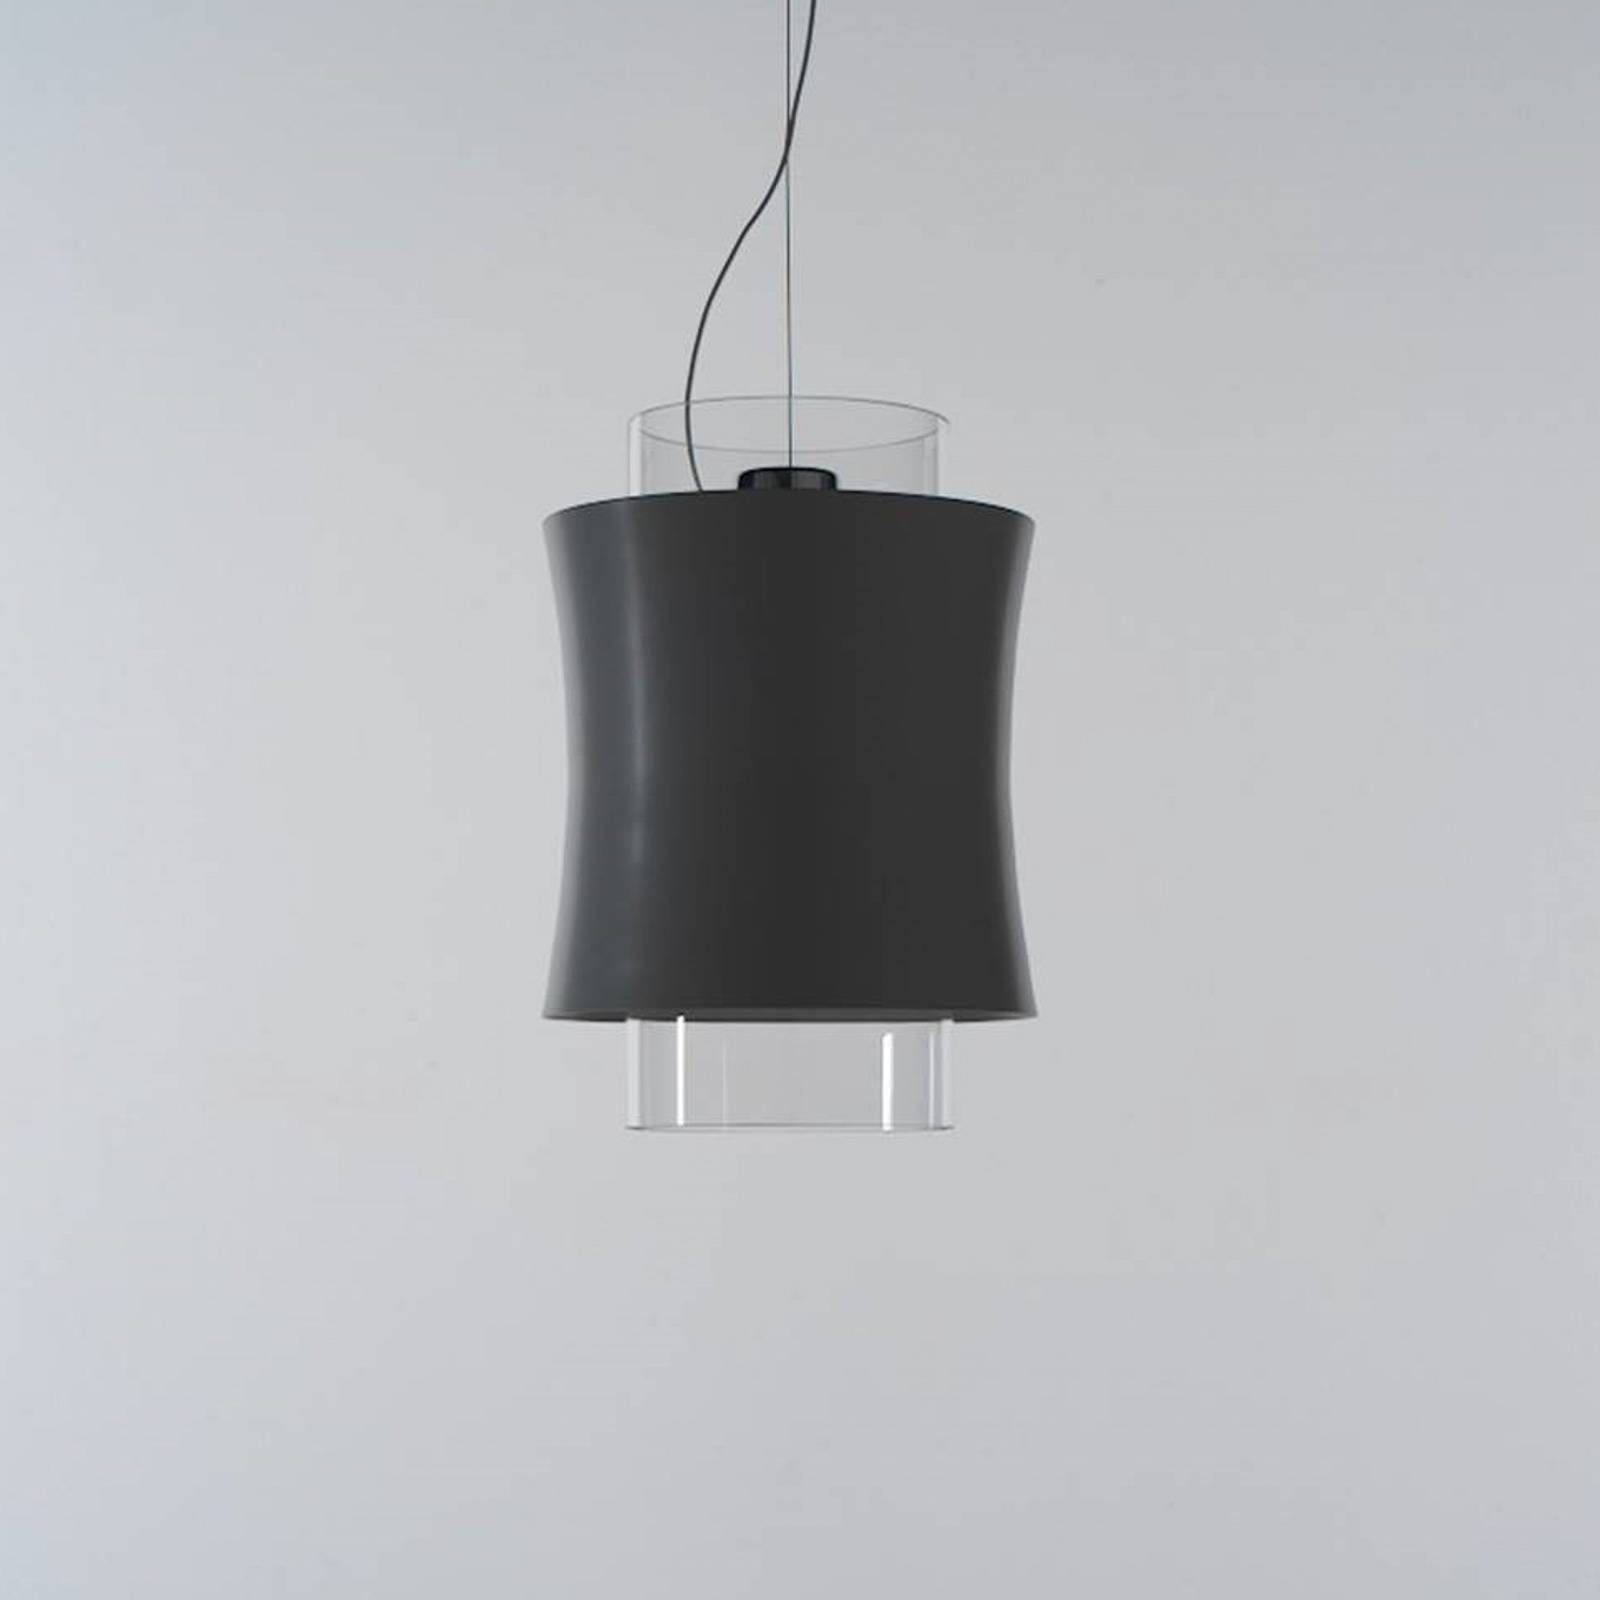 Prandina Fez S1 hanglamp zwart